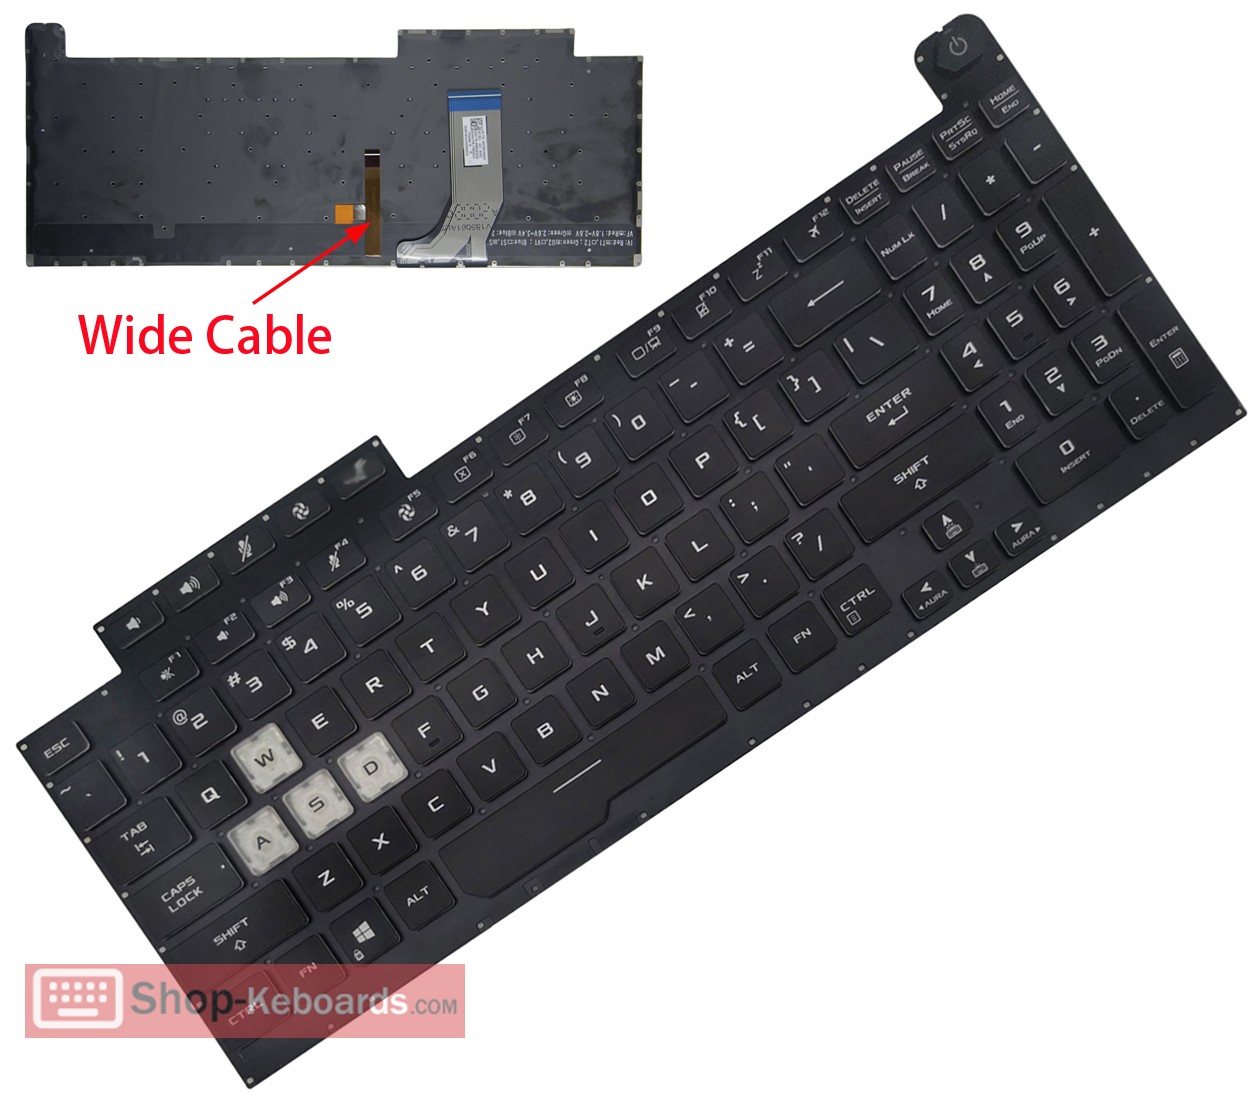 Asus 0KNR0-661MAR00  Keyboard replacement